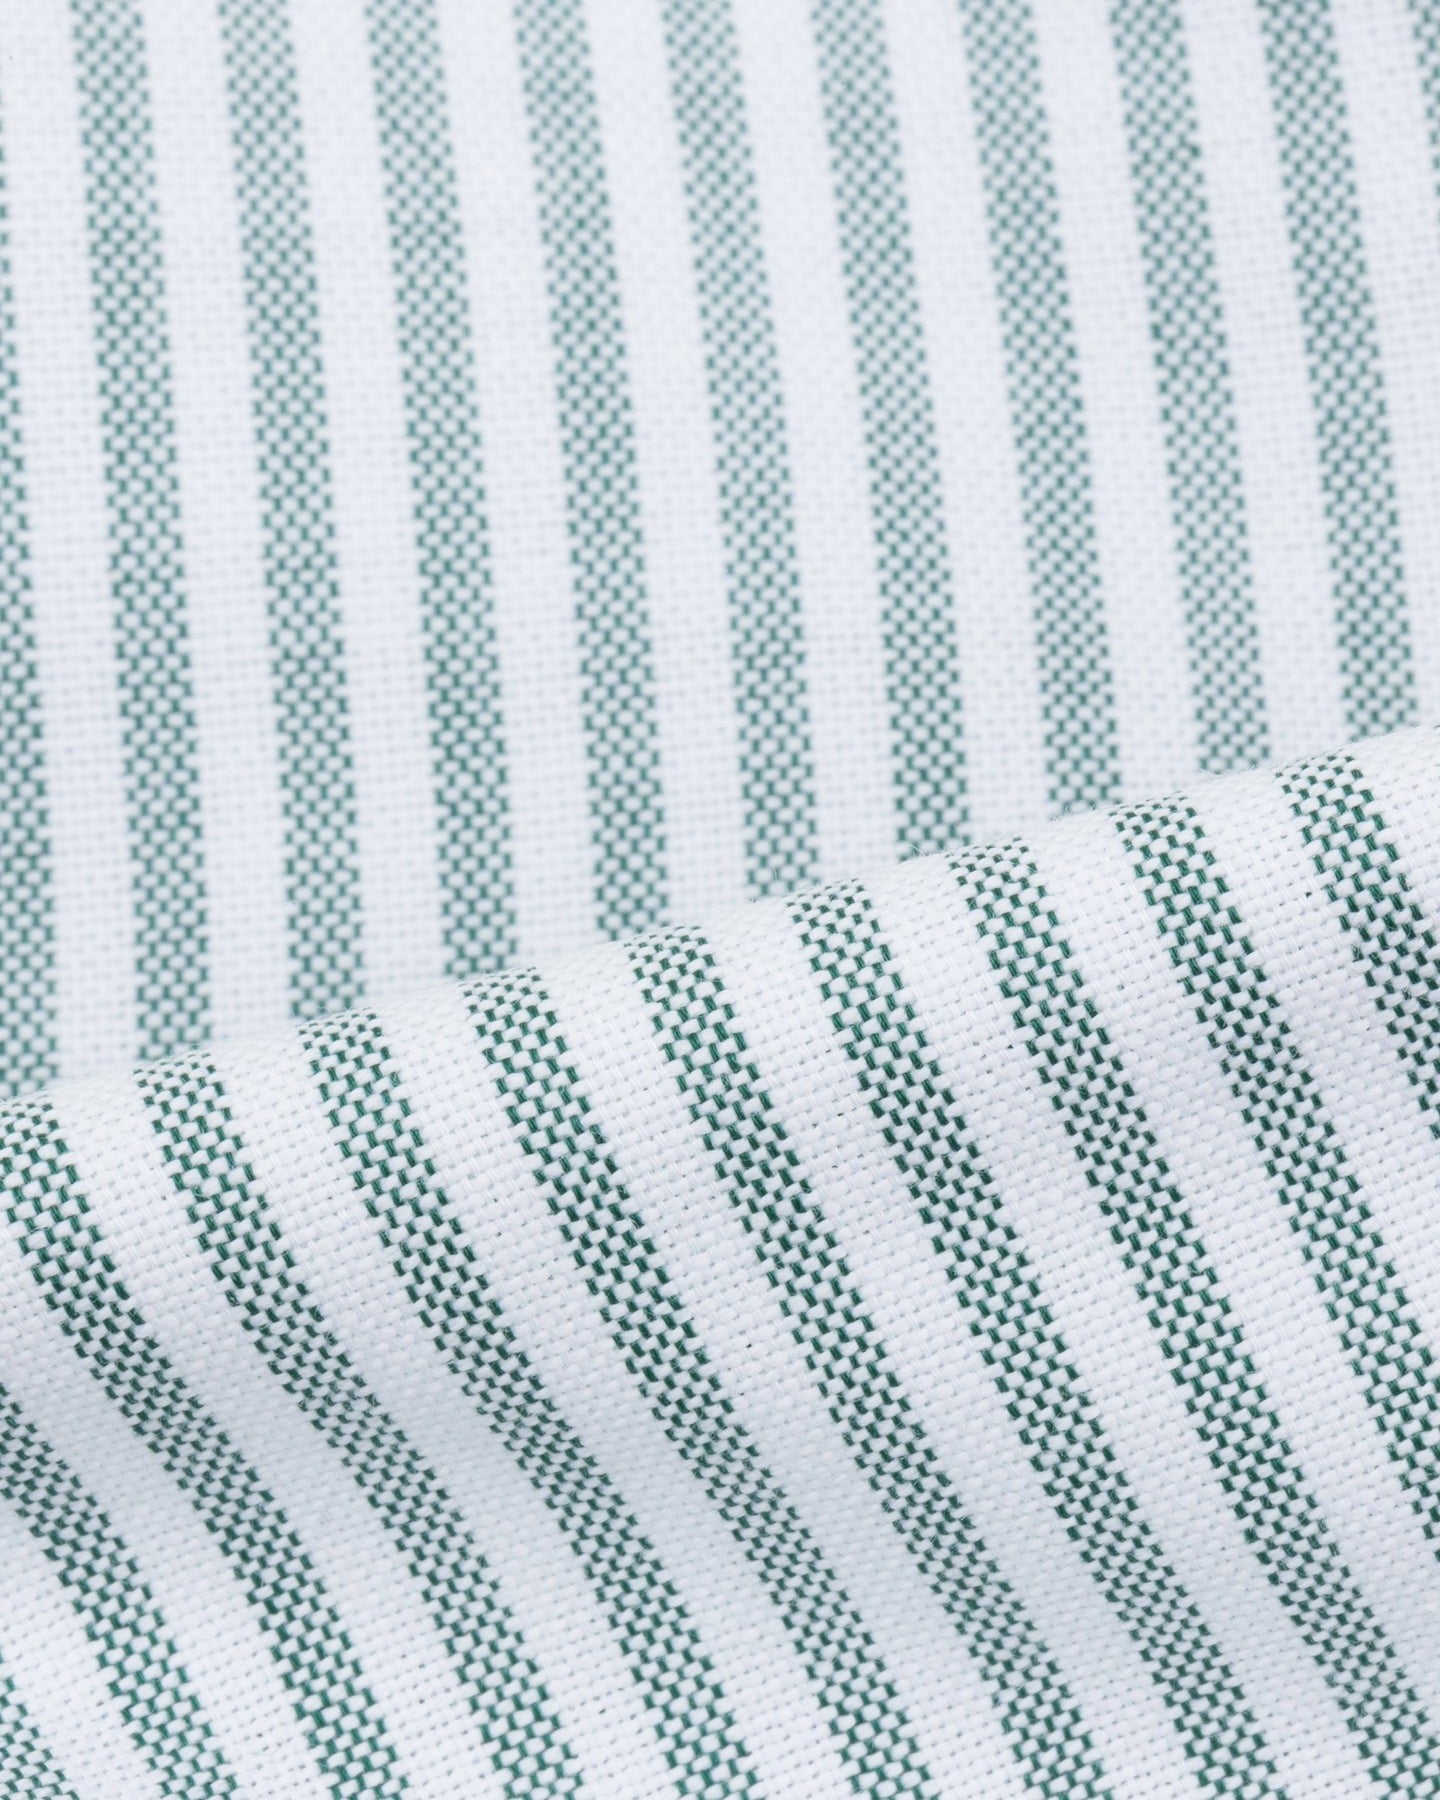 Green university stripe oxford cloth shirt fabric